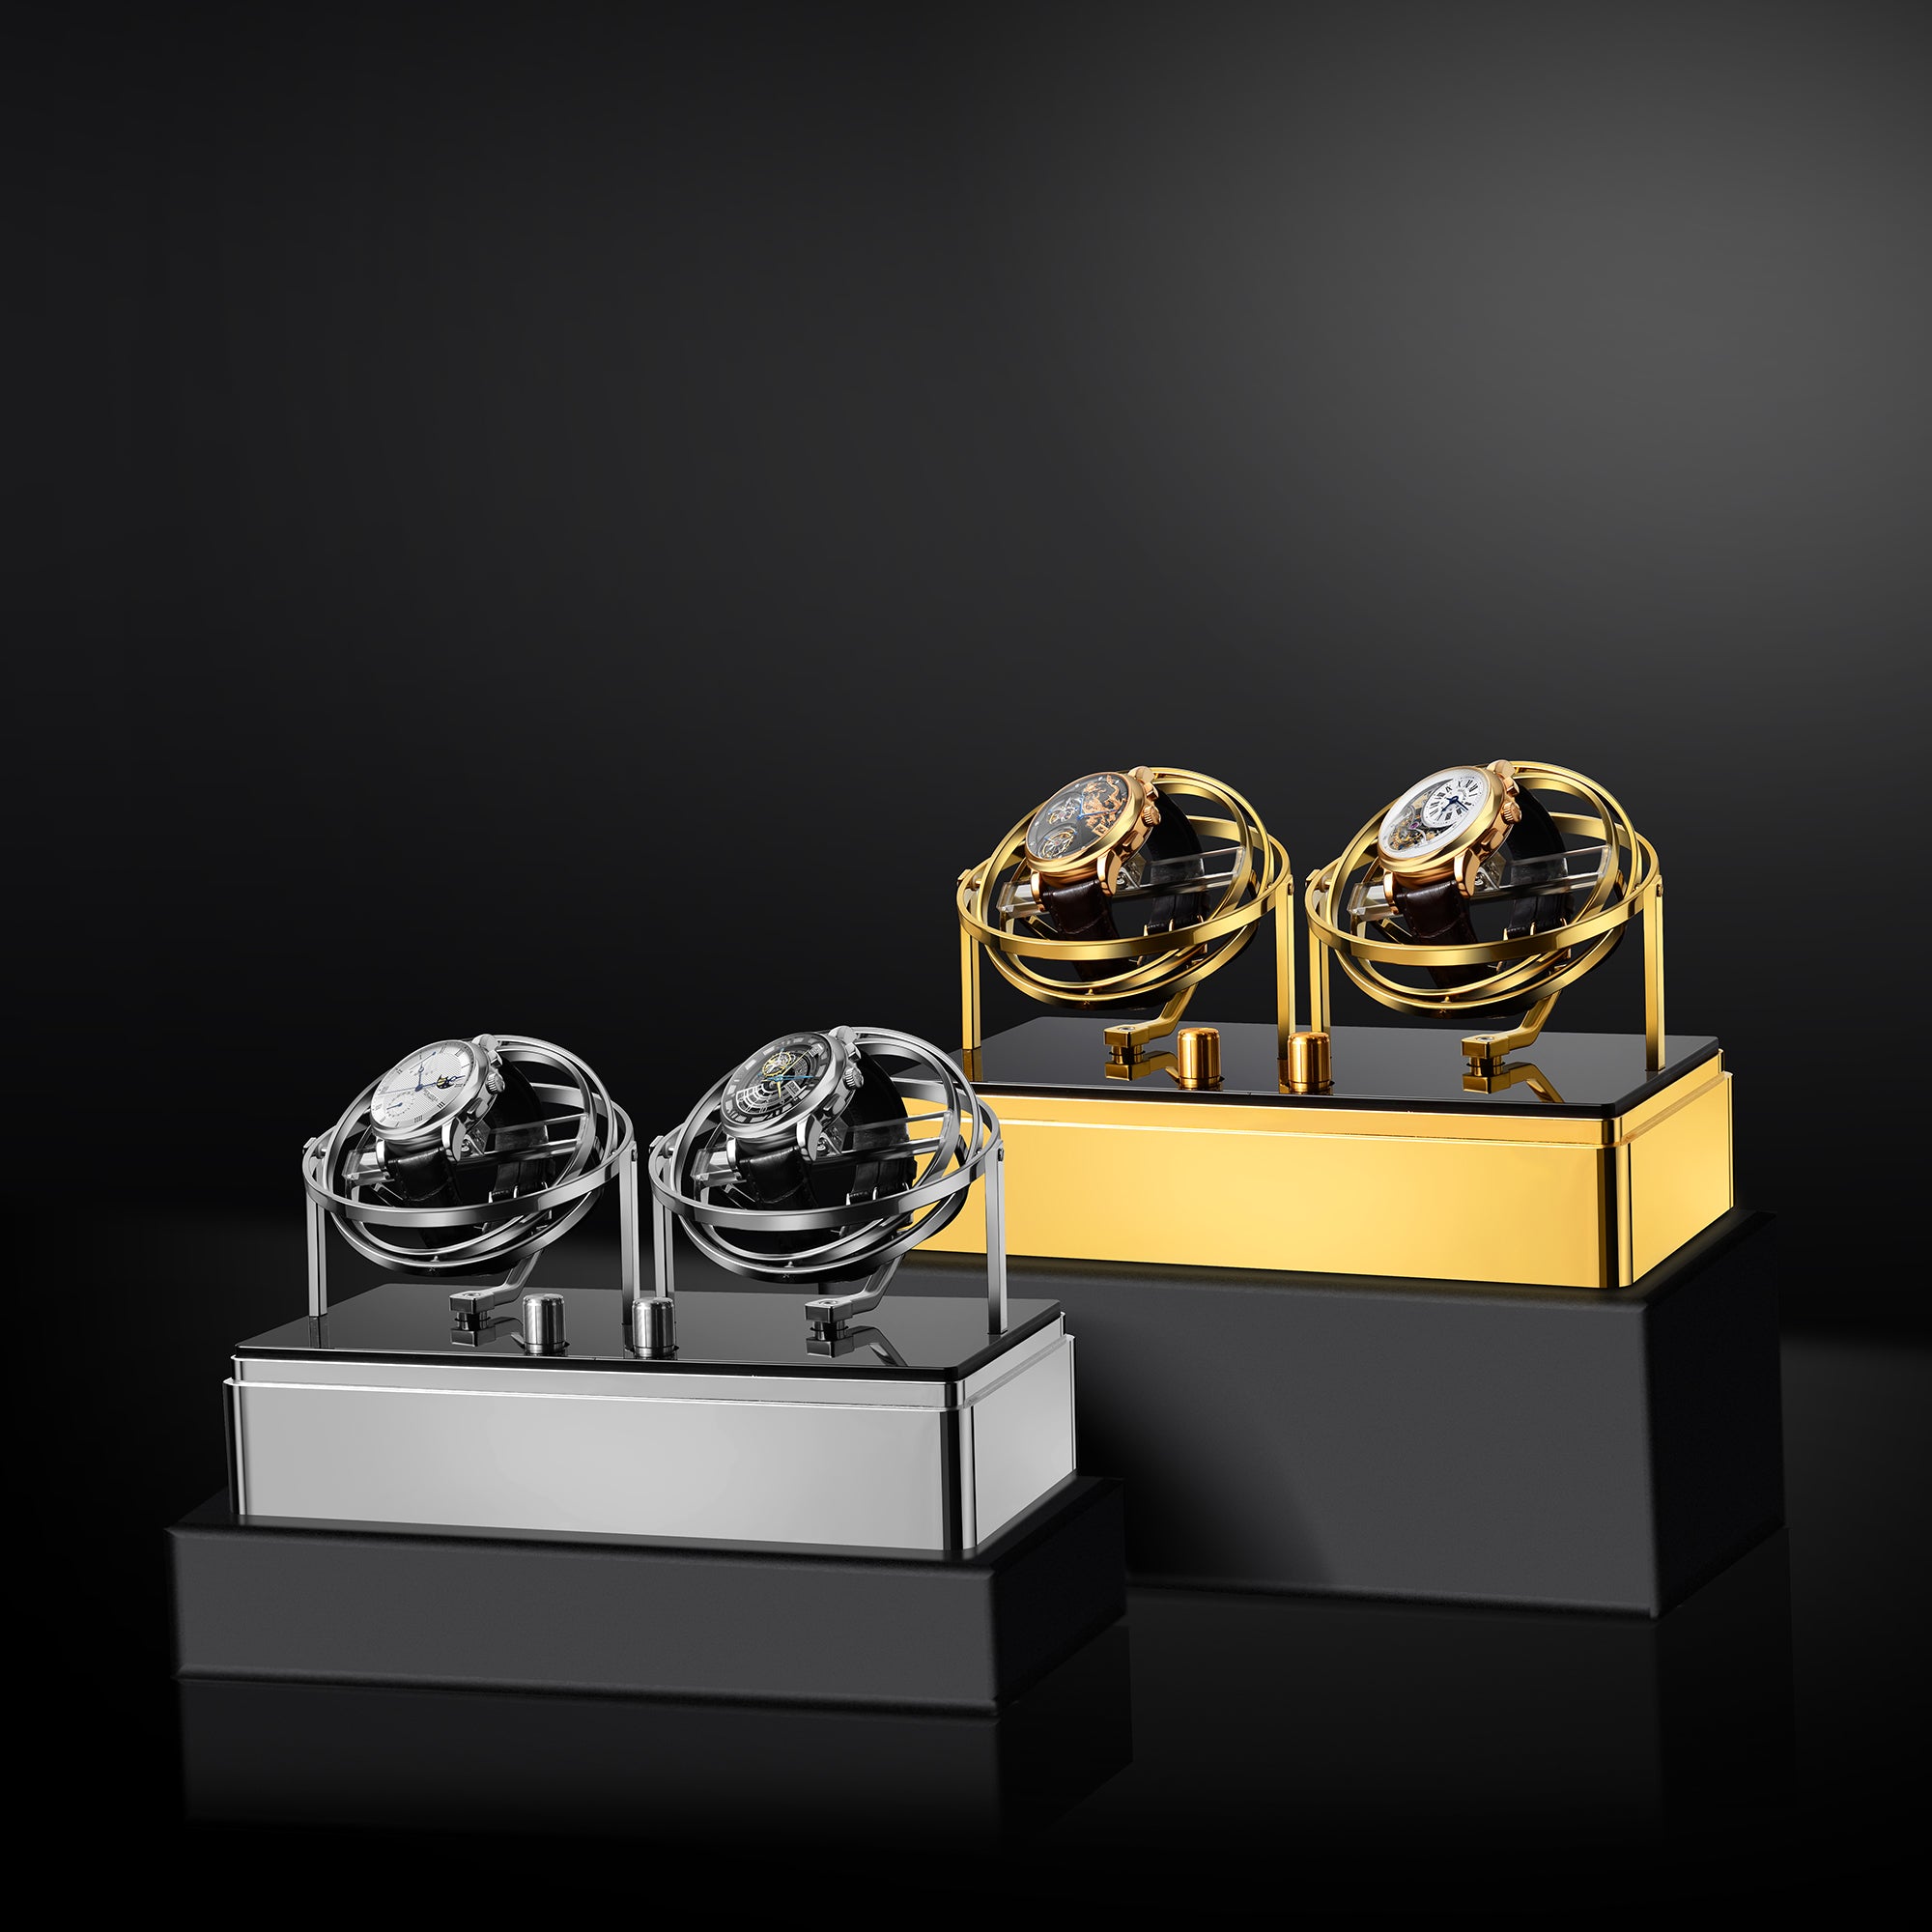 Watch Winder - Orbit Y2 Gold Edition - Gyro Automatic Watch Winder